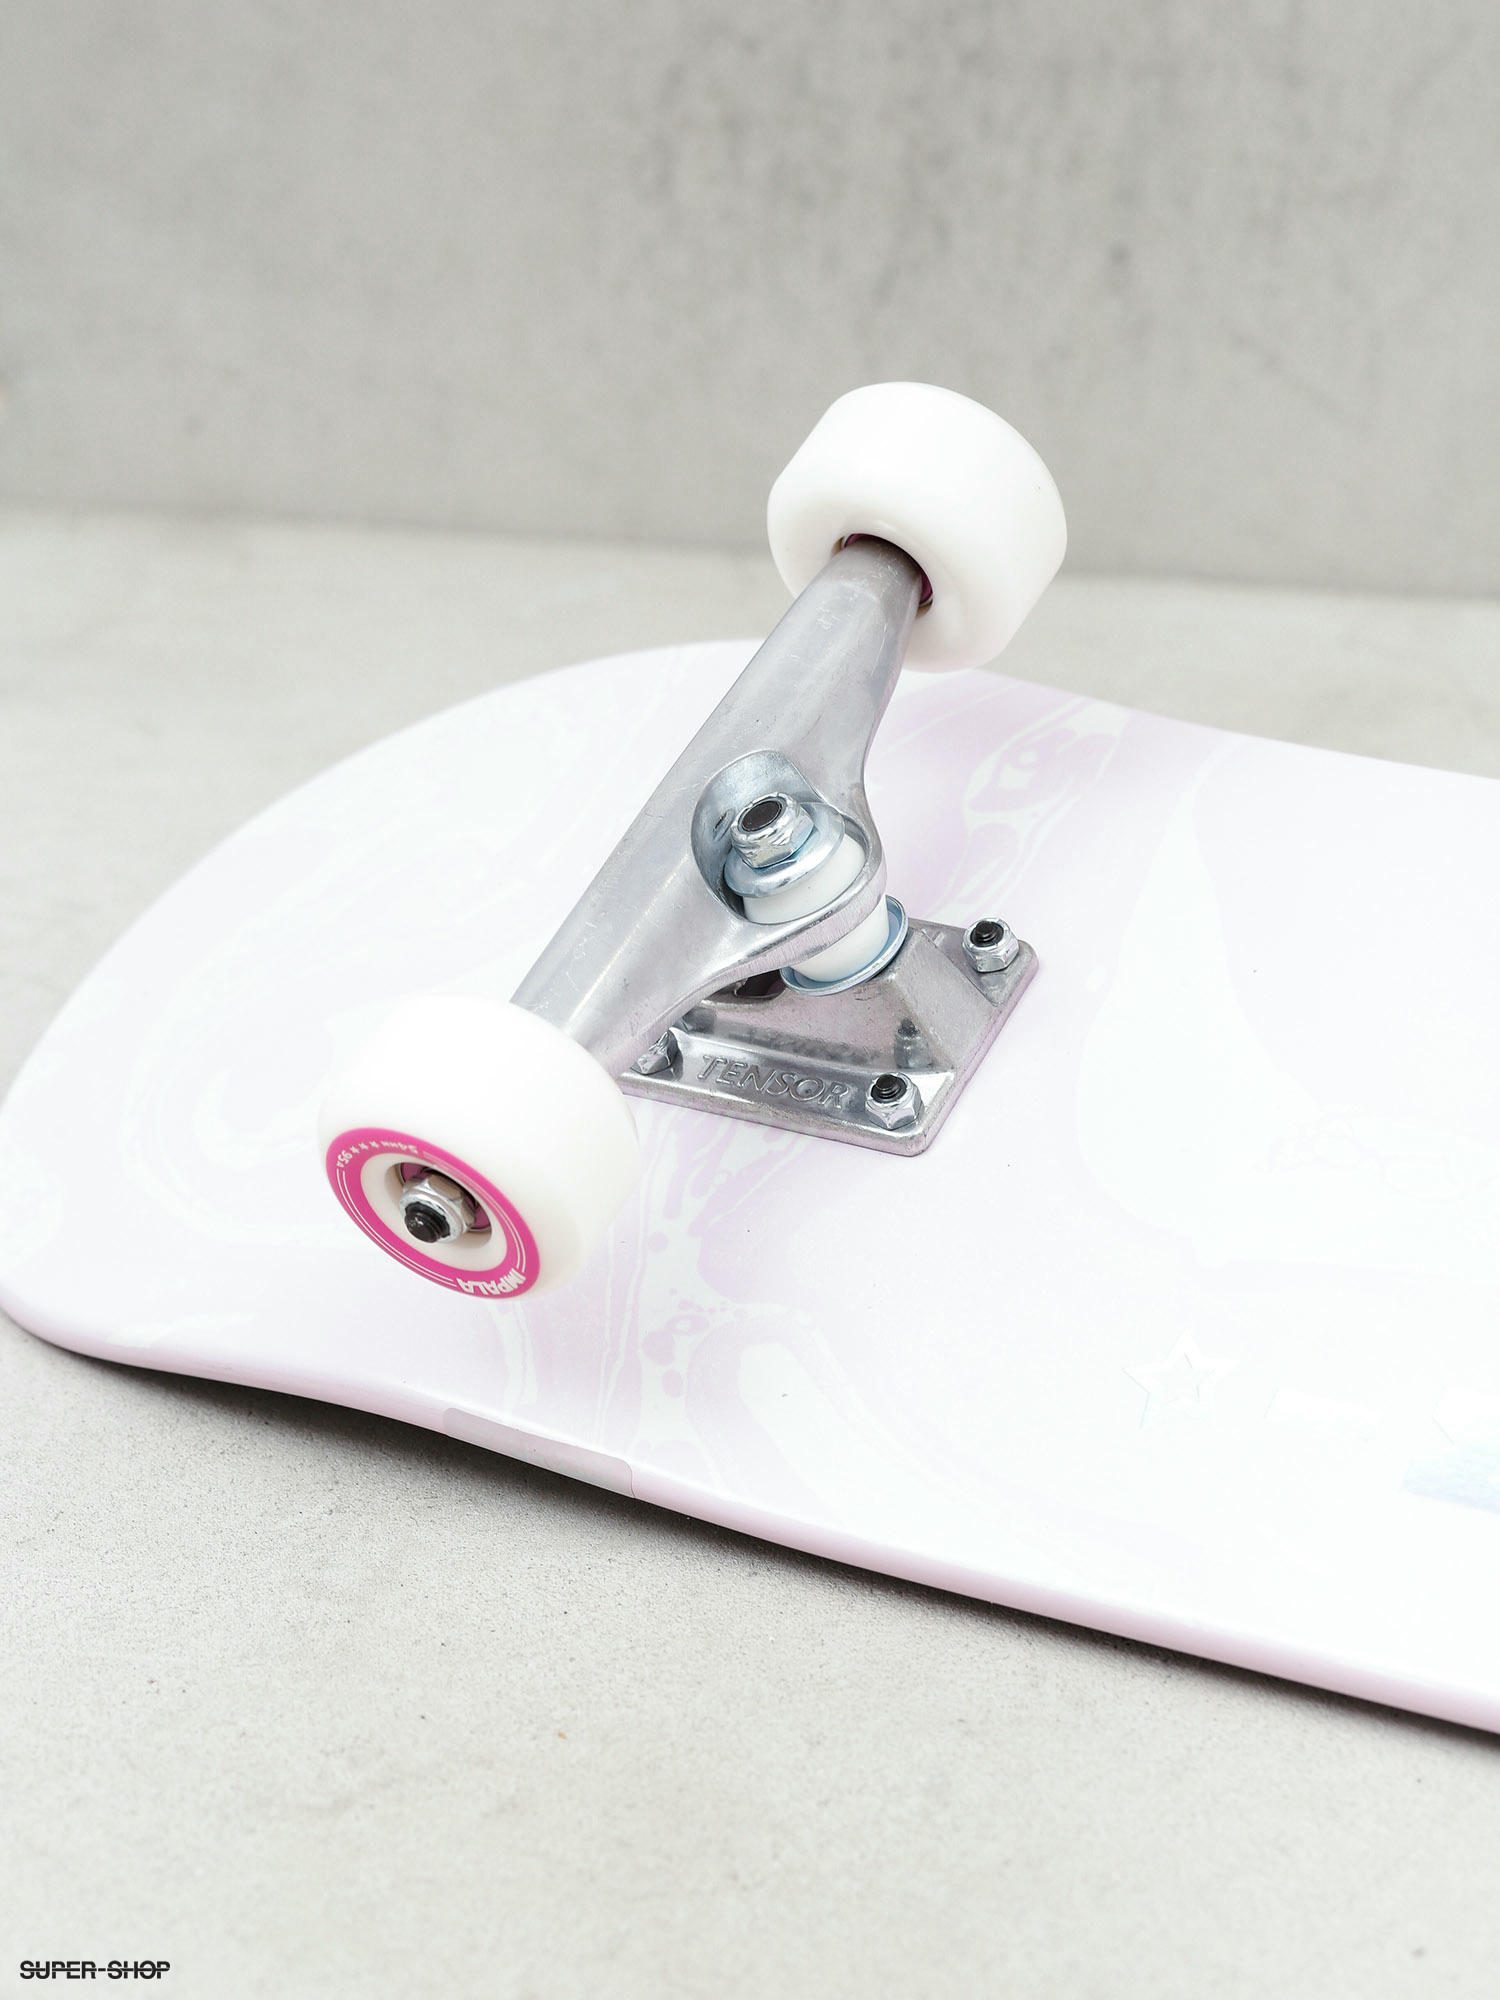 Impala Cosmos Skateboard (pink)